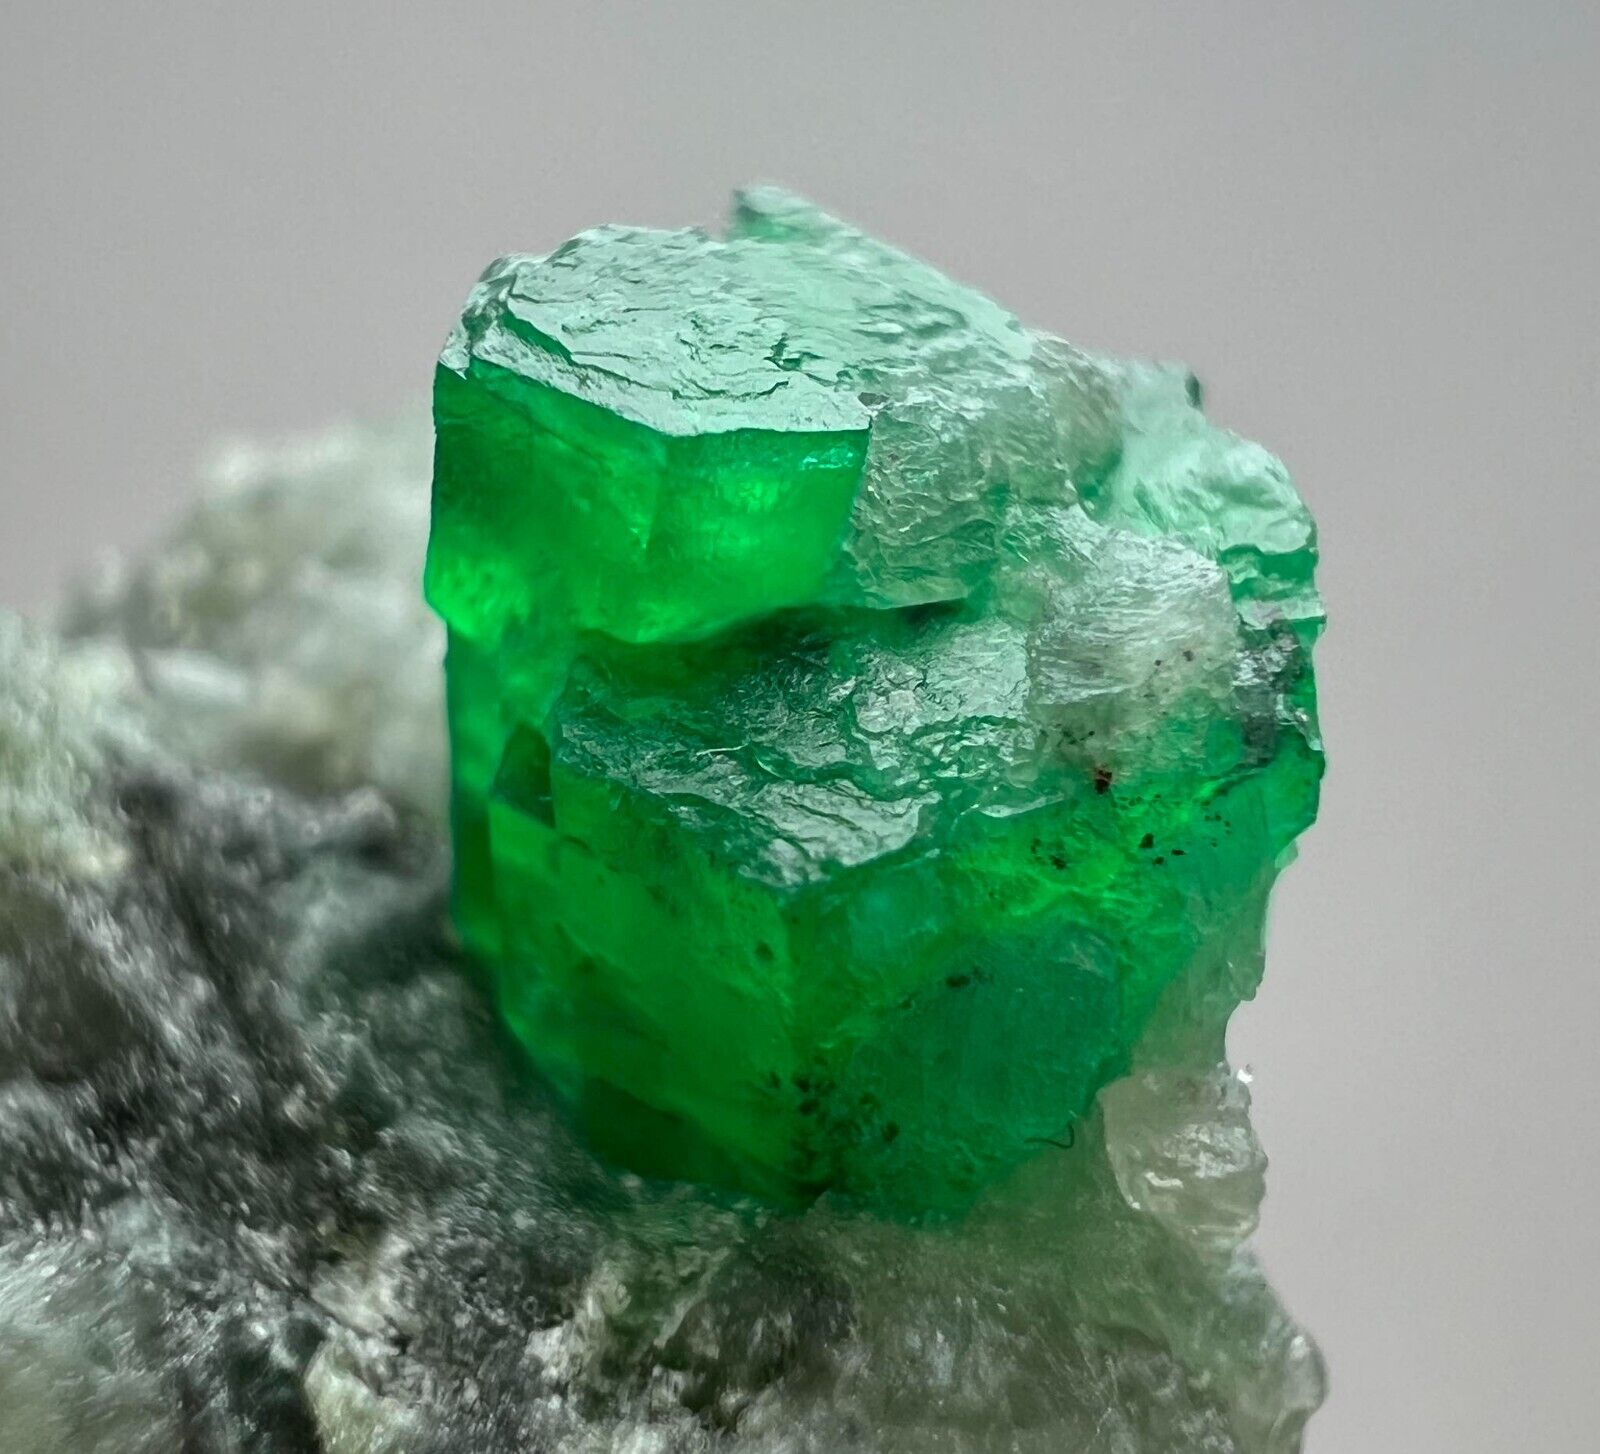 49 Carat Fantastic Top Green Swat Emerald Crystal On Matrix From Pakistan